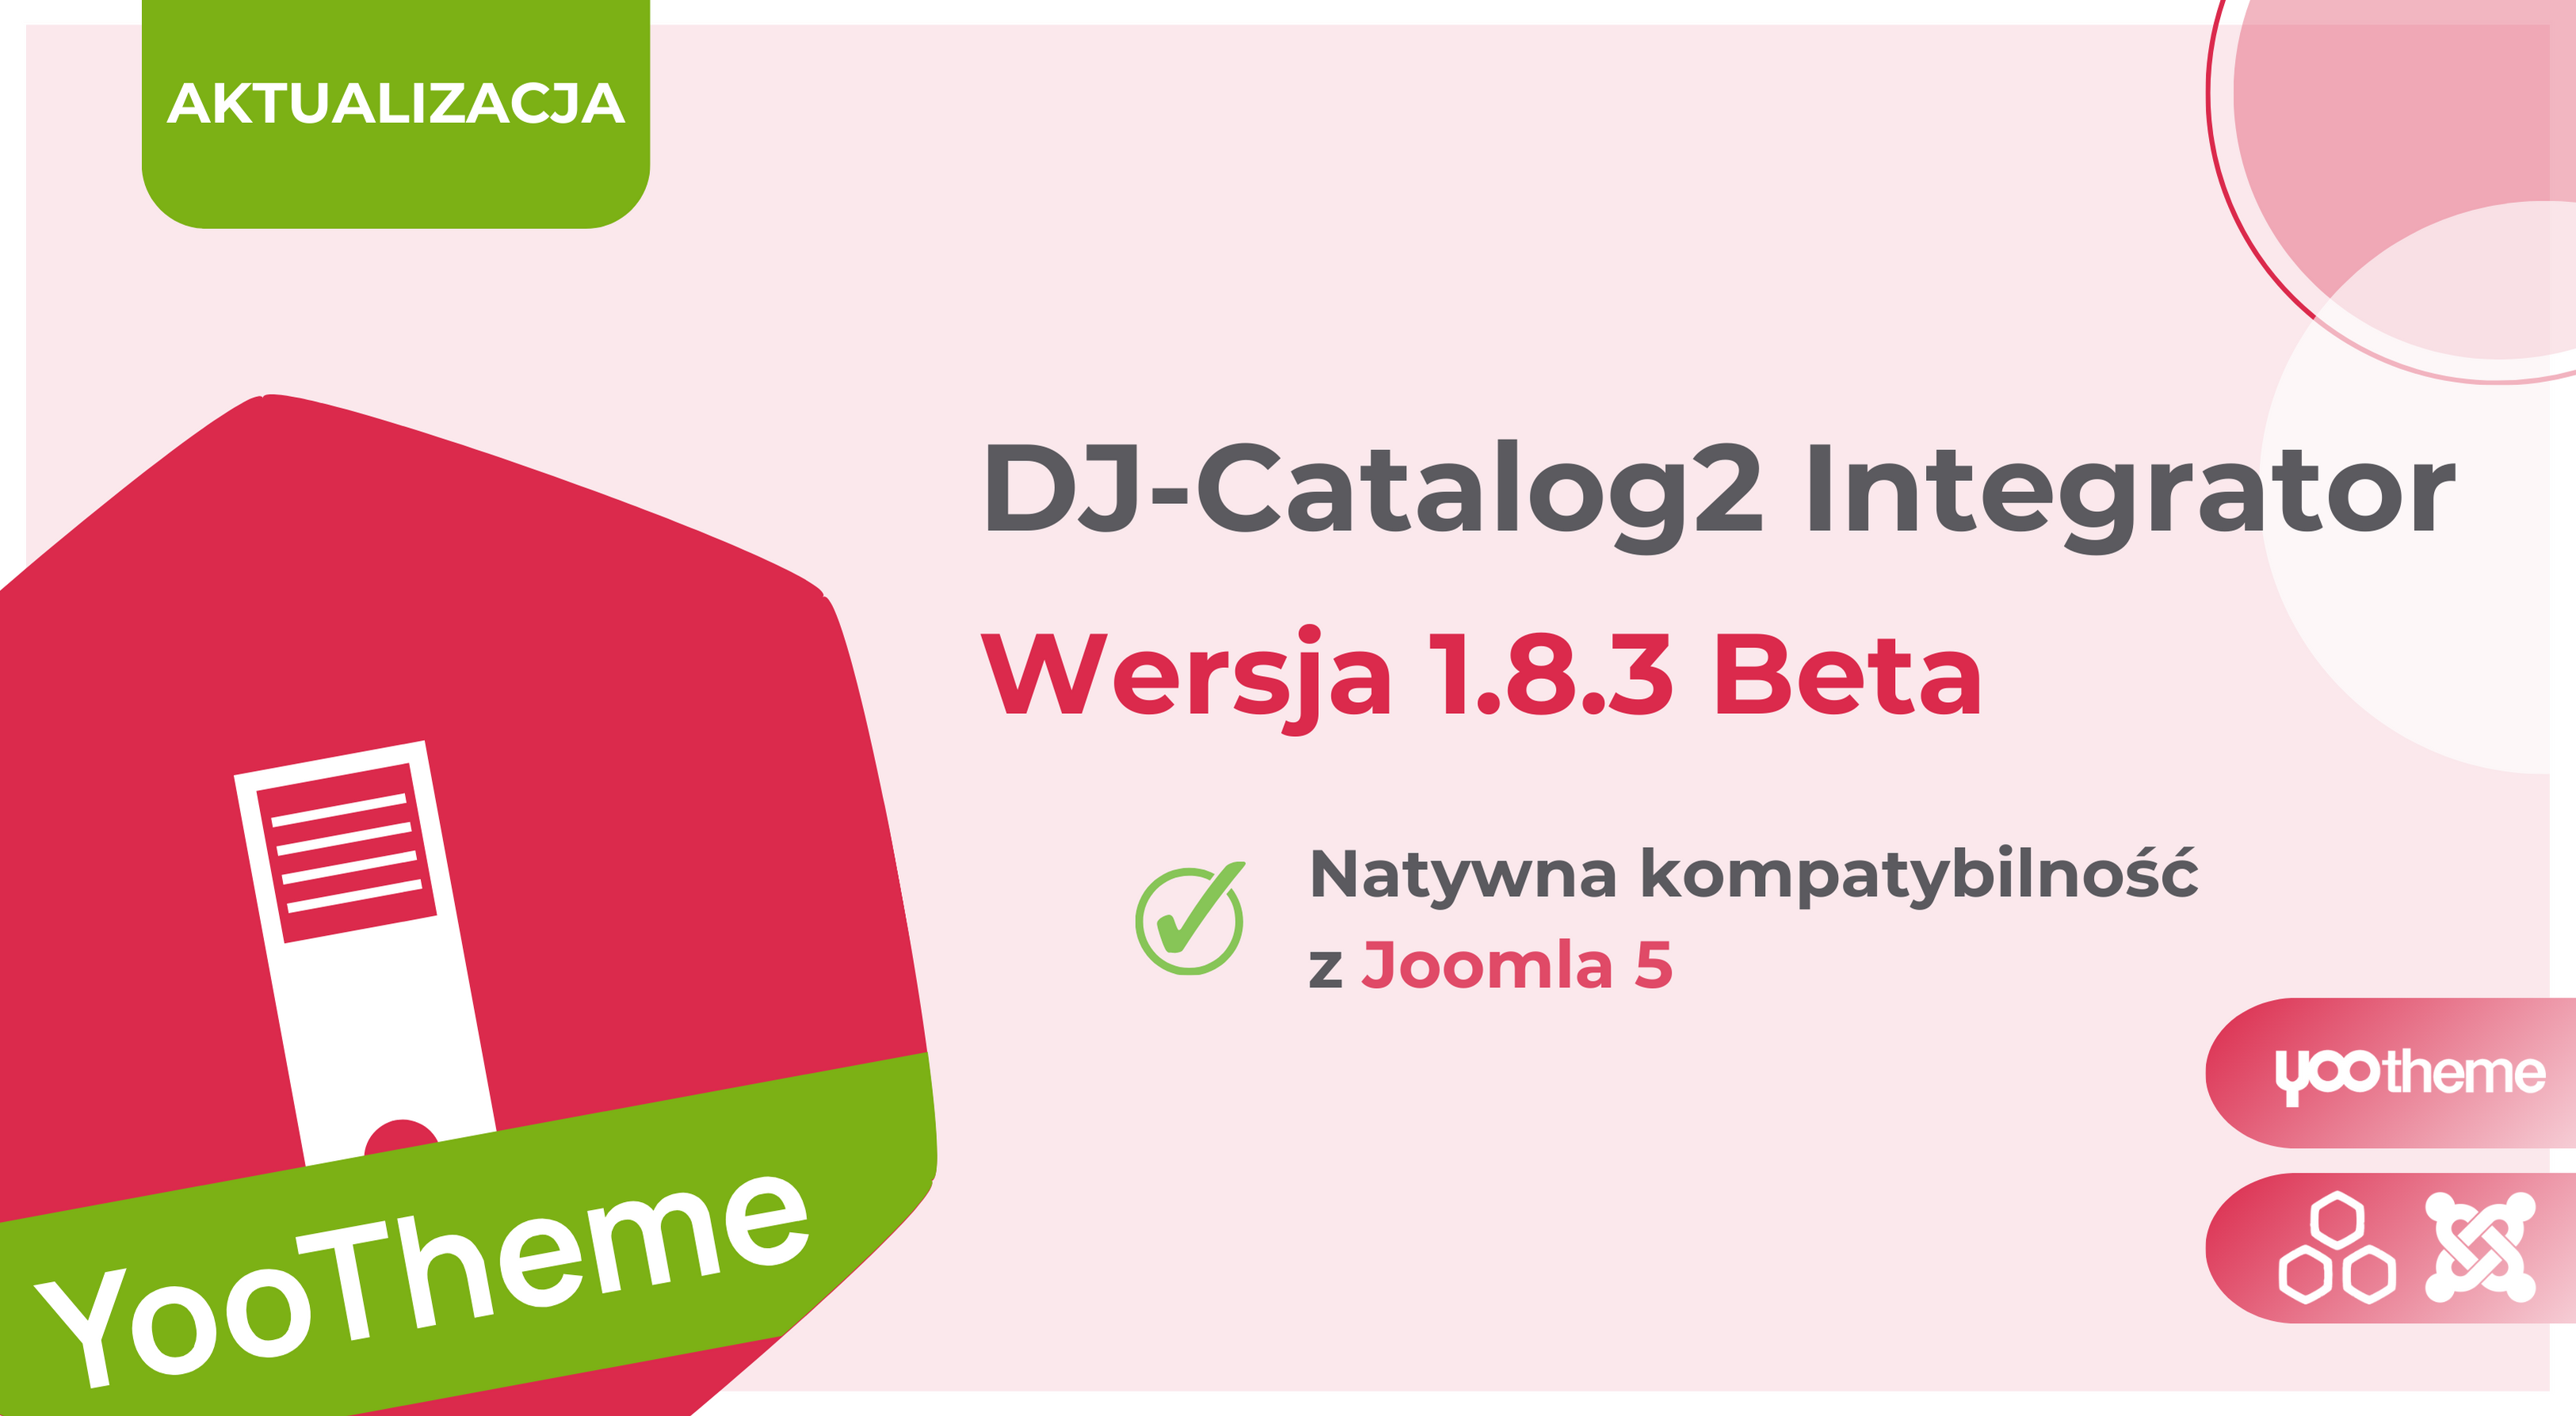 DJ-Catalog2 Integrator dla Joomla 5